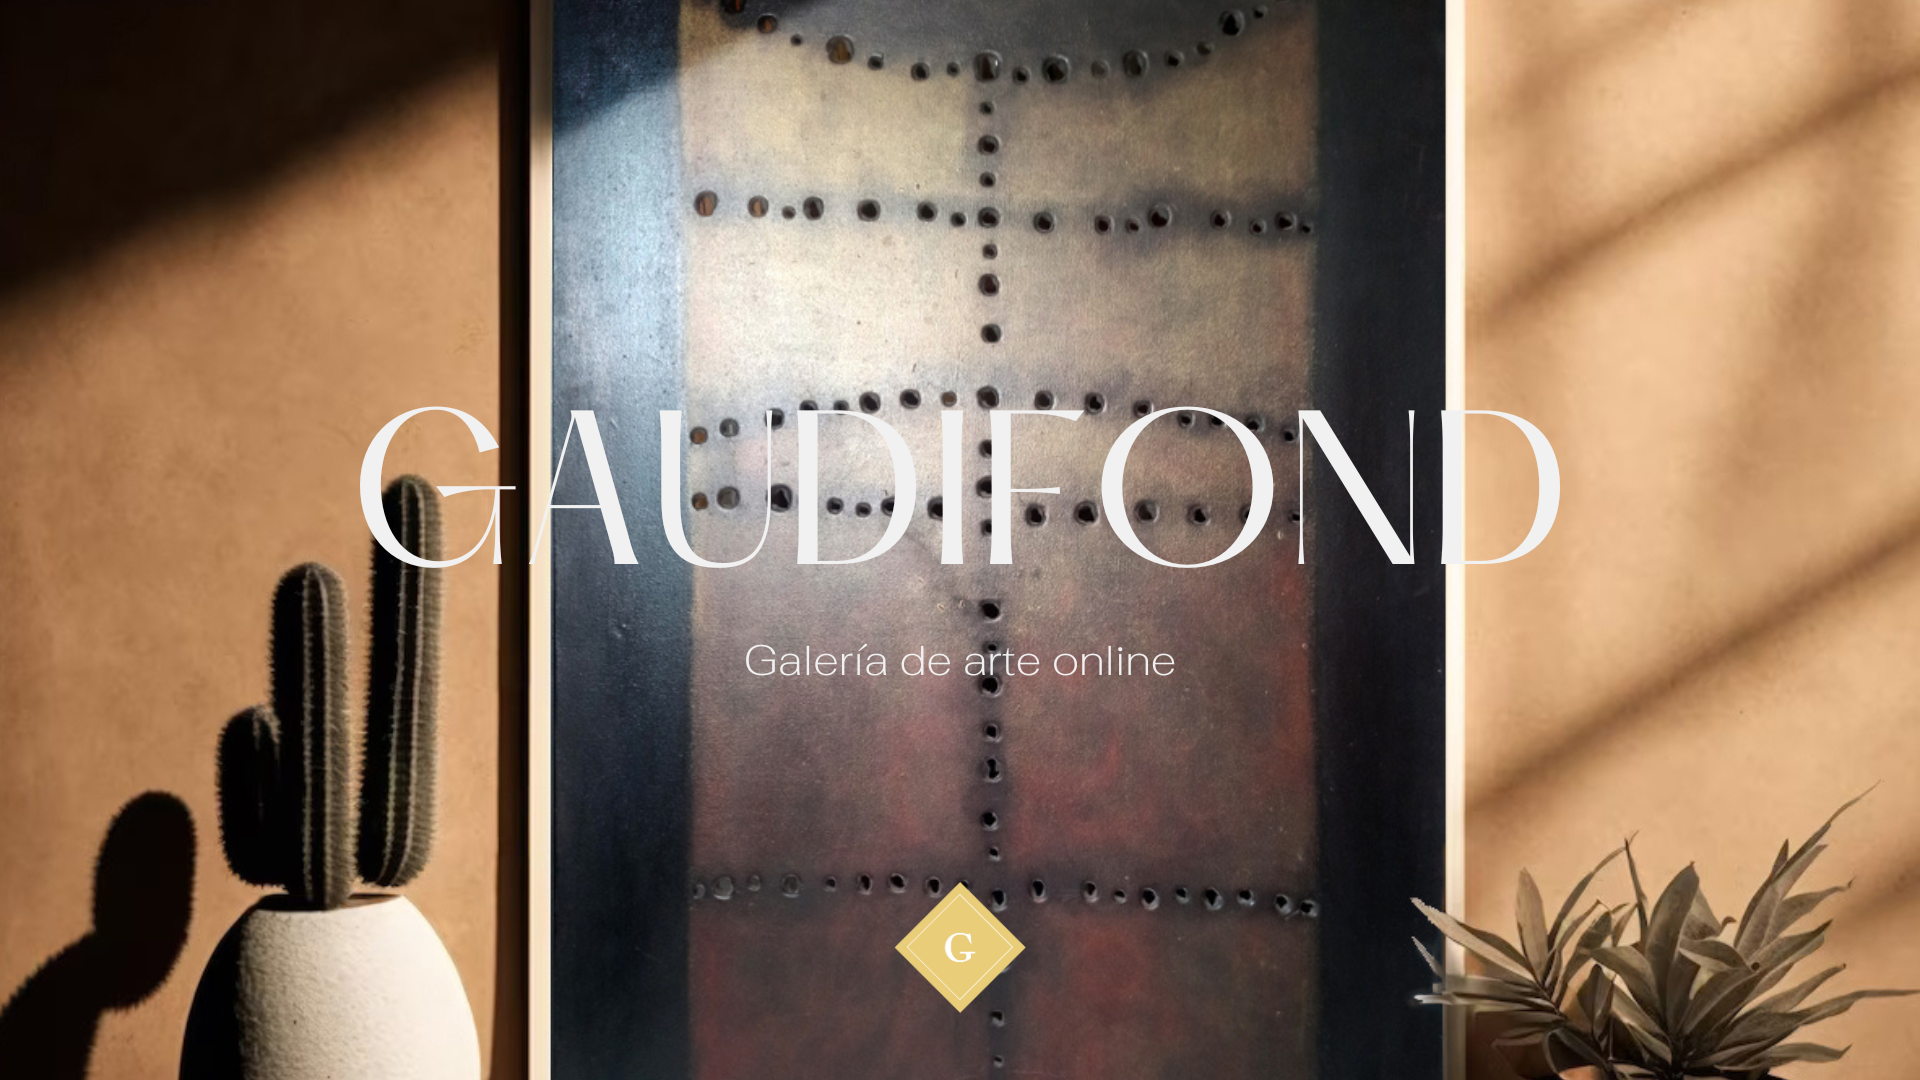 Cargar video: Galeria de arte online Gaudifond